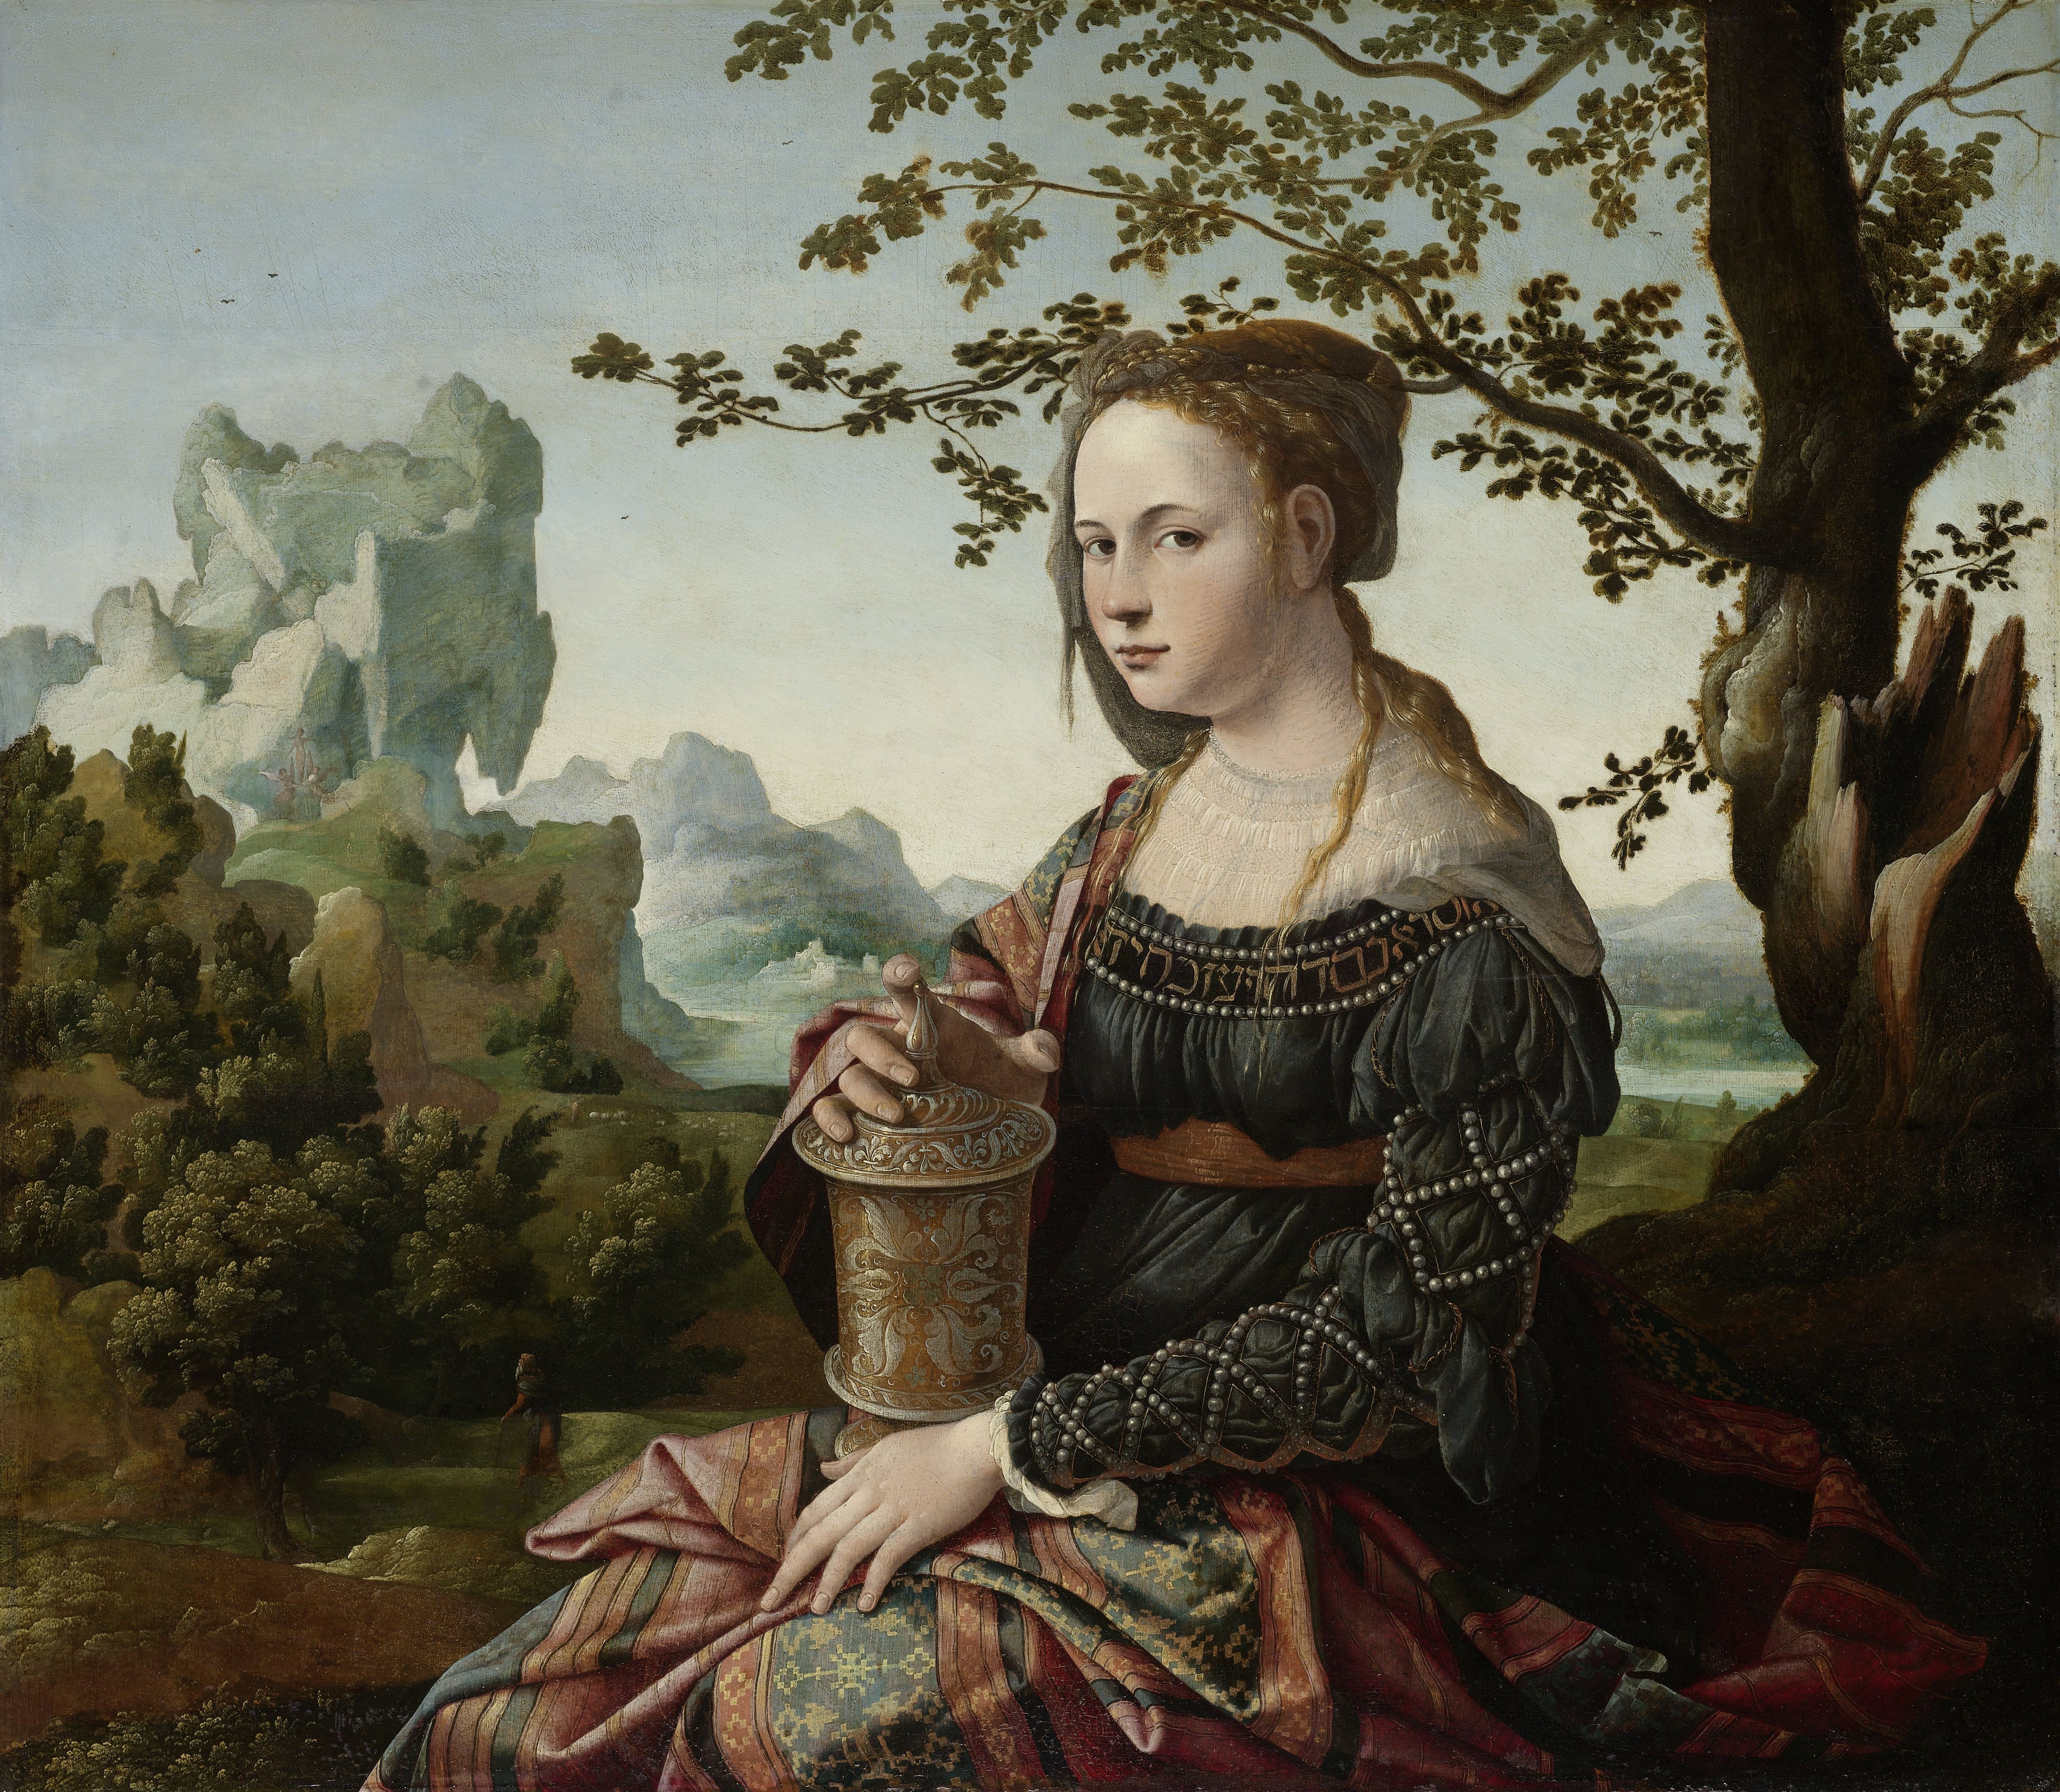 Pictura lui Maria Magdalena by Jan van Scorel - 1530 - 66,3 x 76 cm 